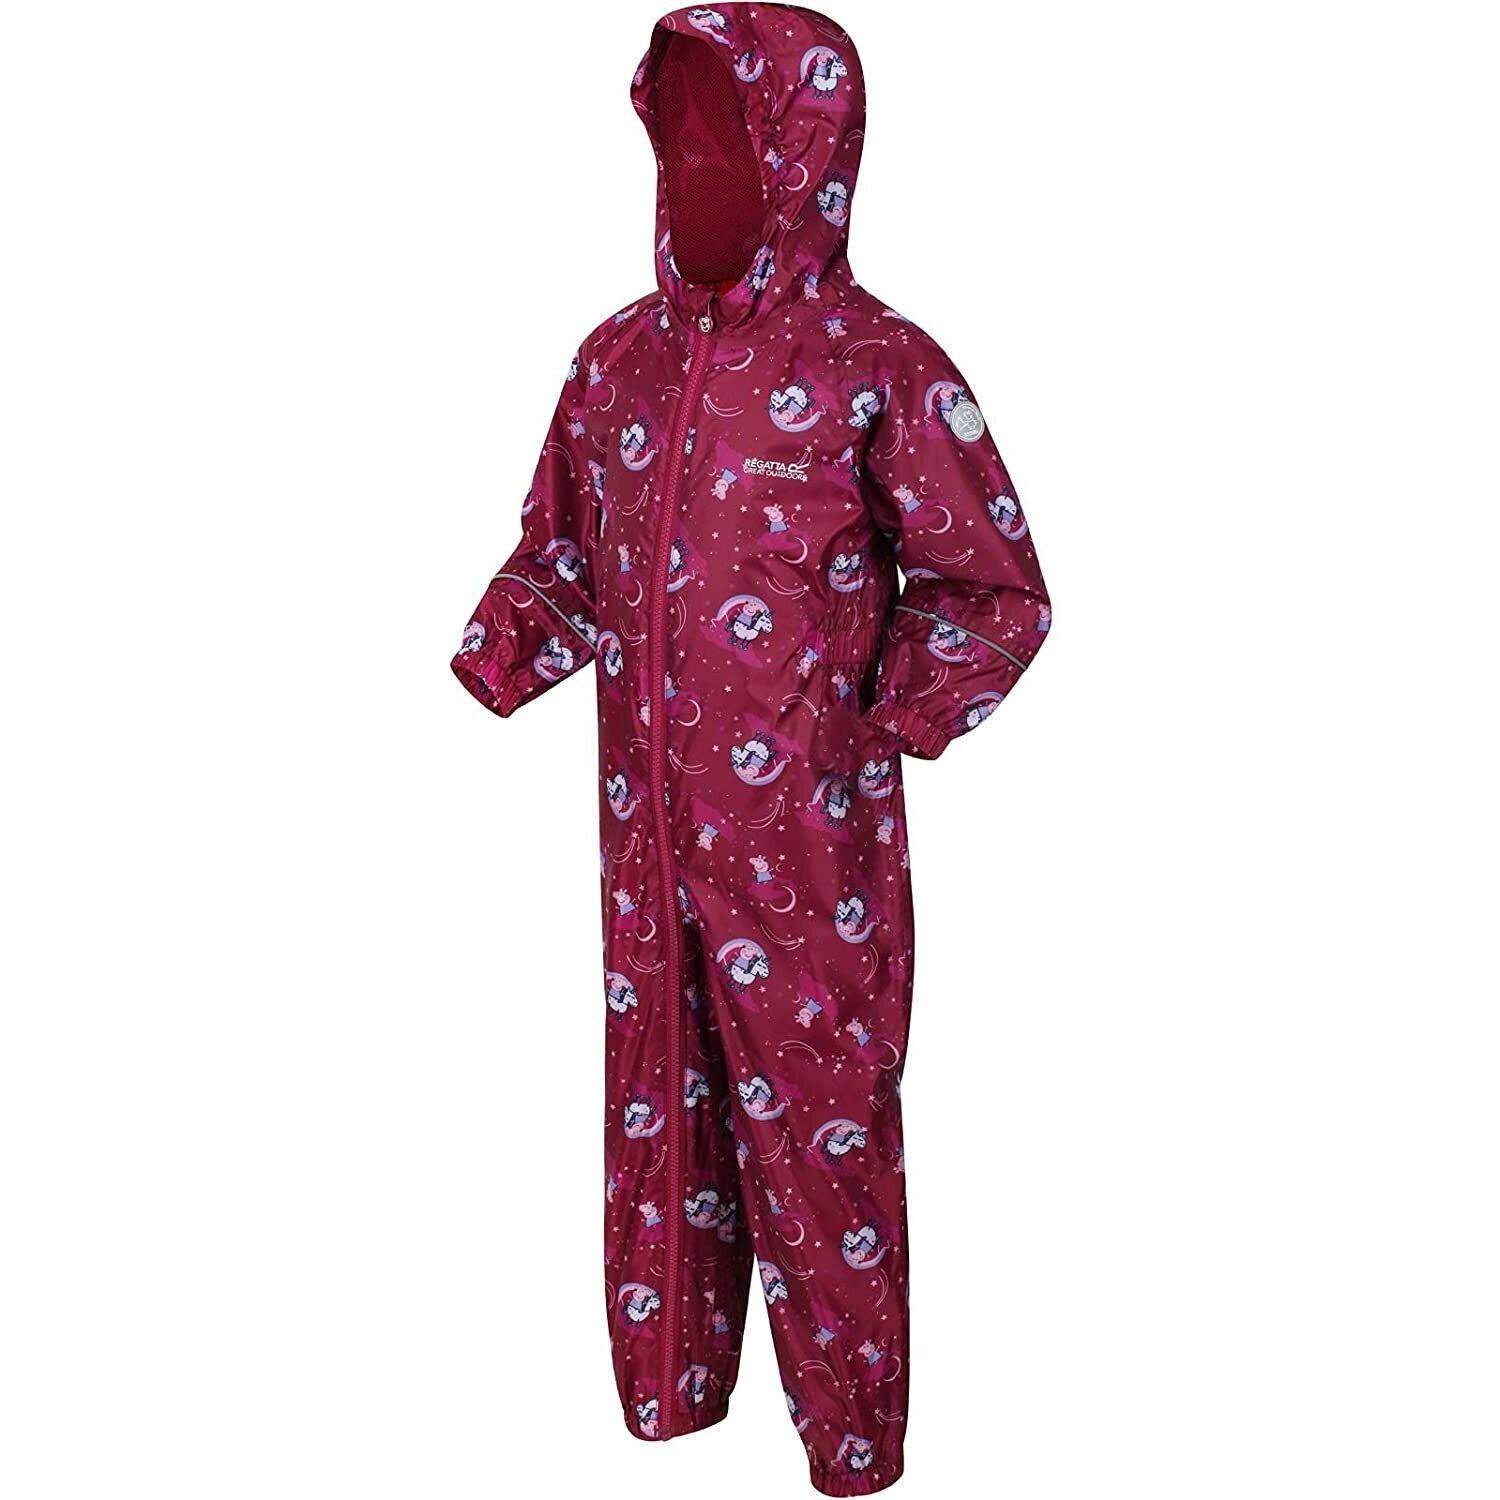 REGATTA Childrens/Kids Peppa Pig Unicorn Waterproof Puddle Suit (Raspberry Radiance)